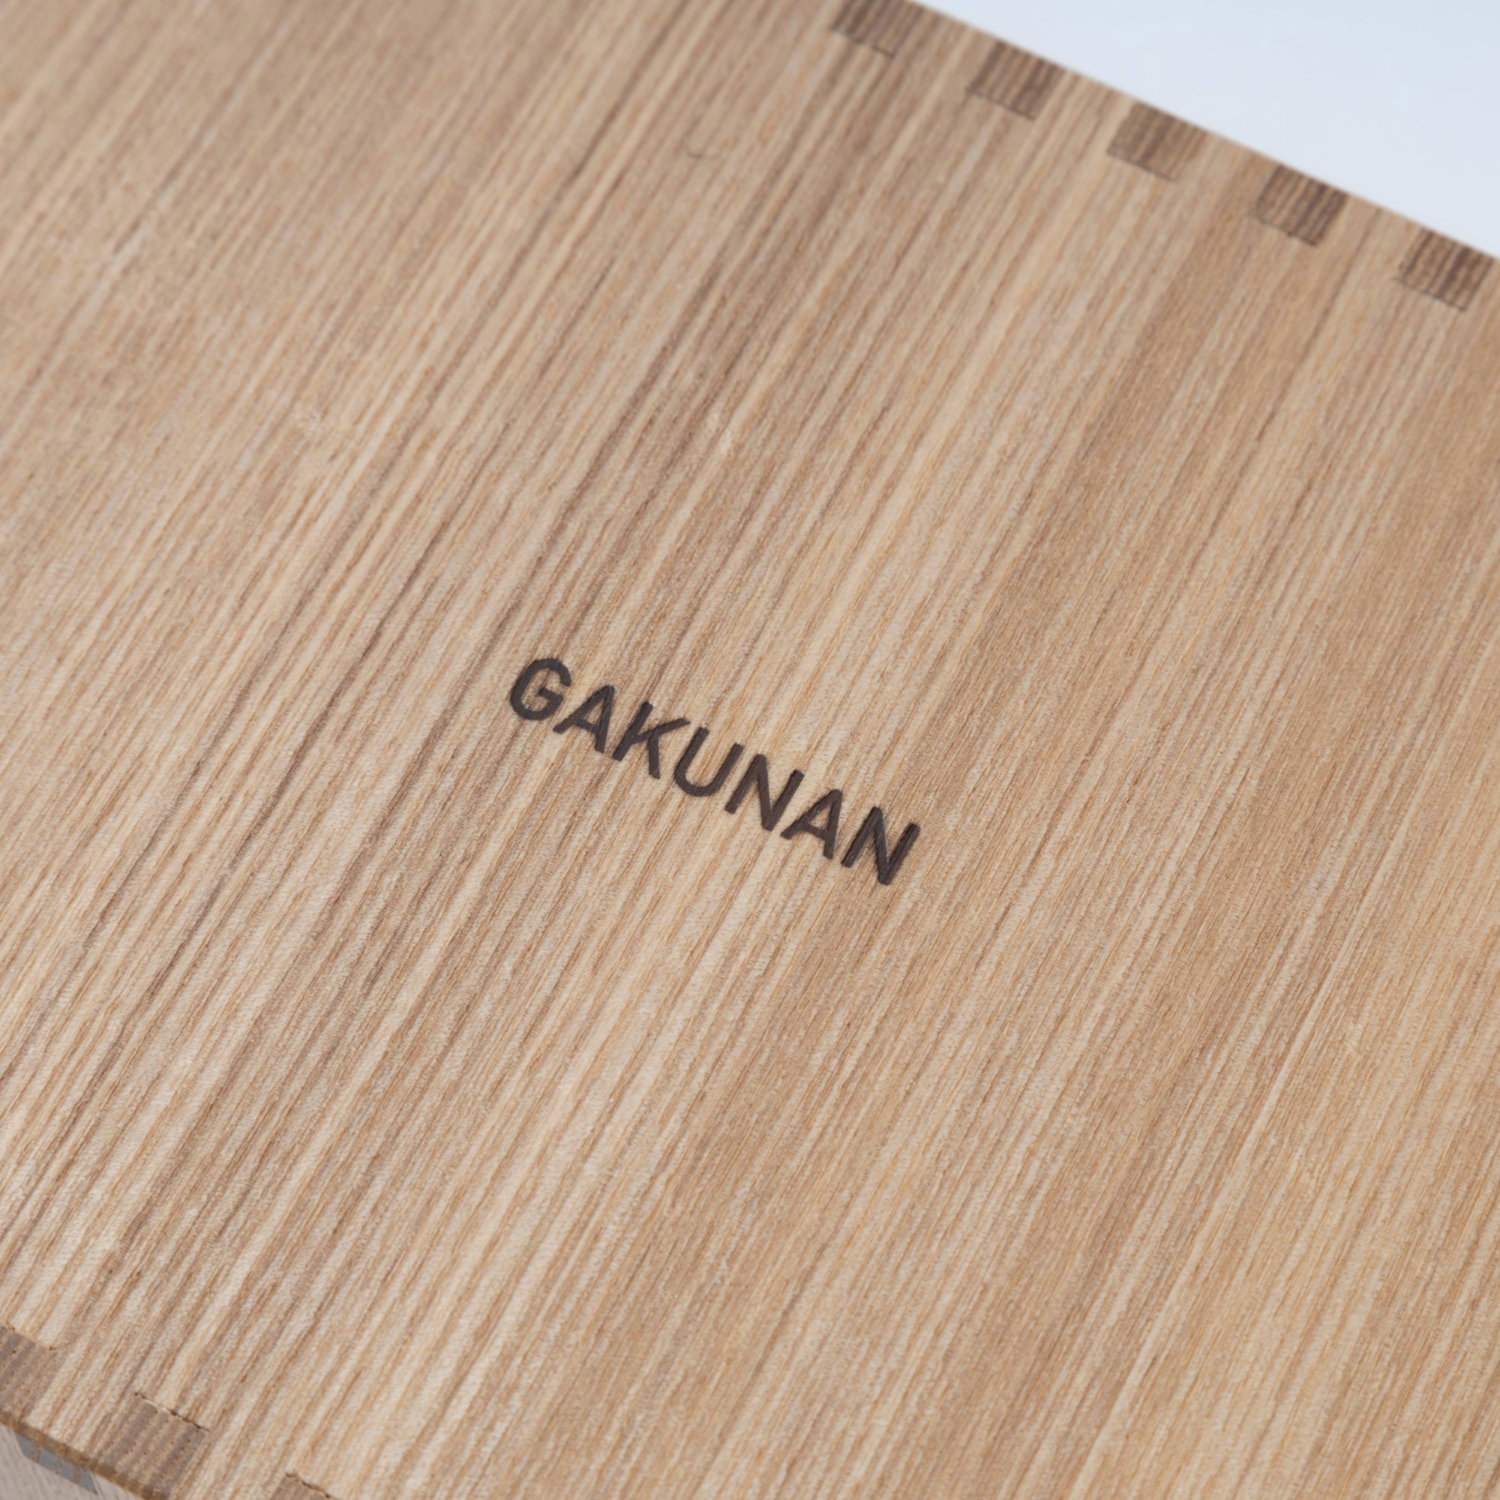 GAKUNAN/タモ材のティッシュケース トレイ